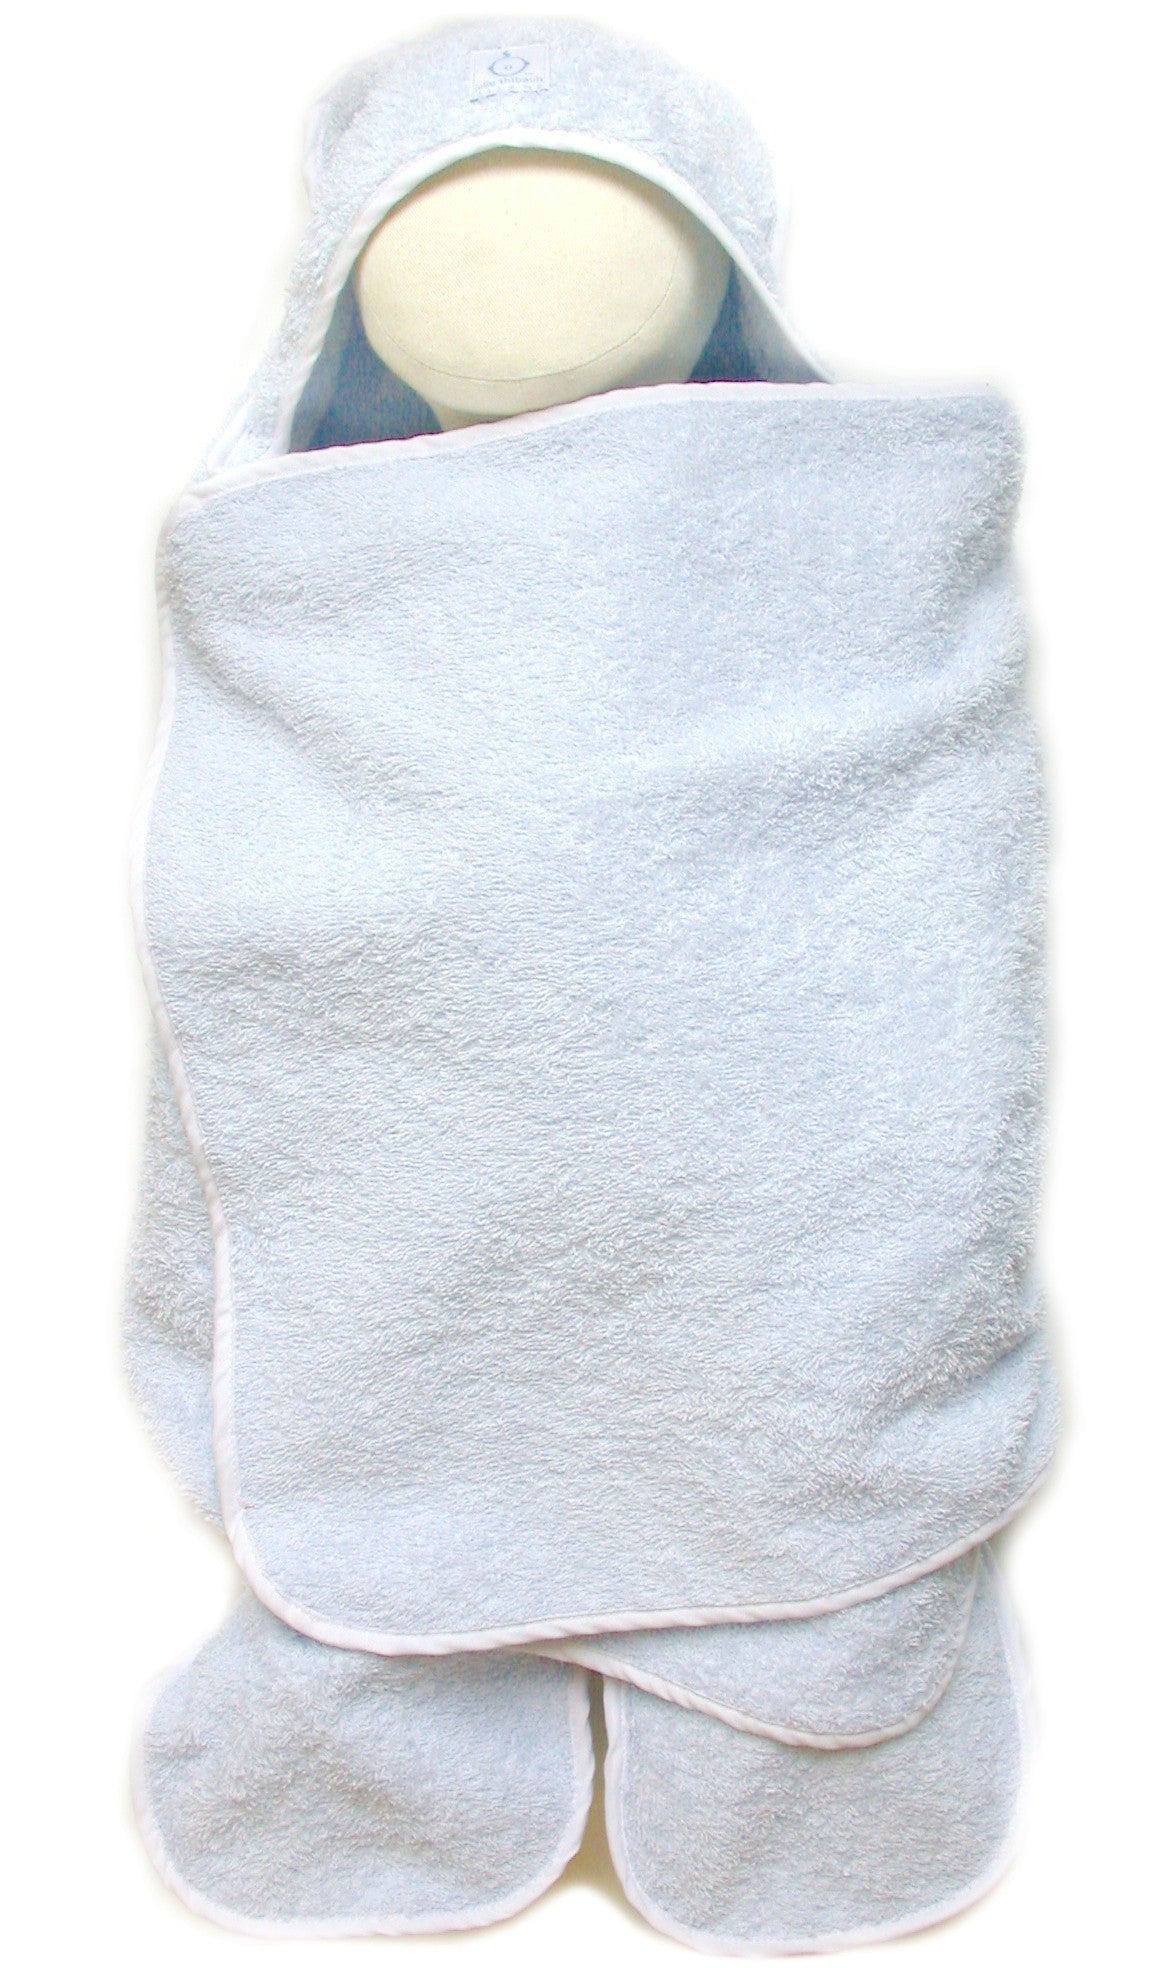 Bath Pod, the best towel with feet | juliethibault.com